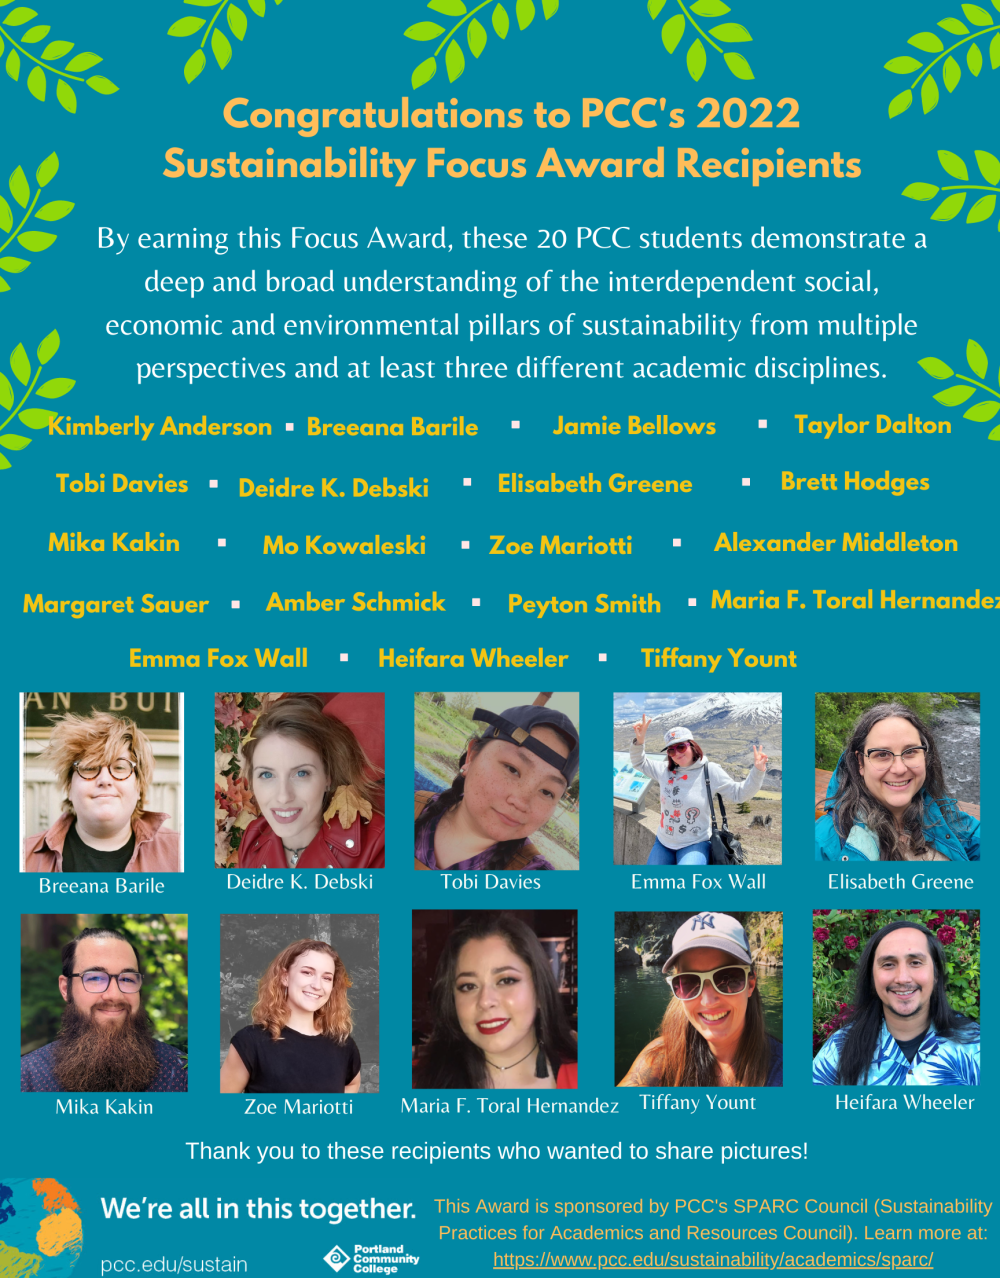 Congratulations to PCC's 2022 Sustainability Focus Award recipients